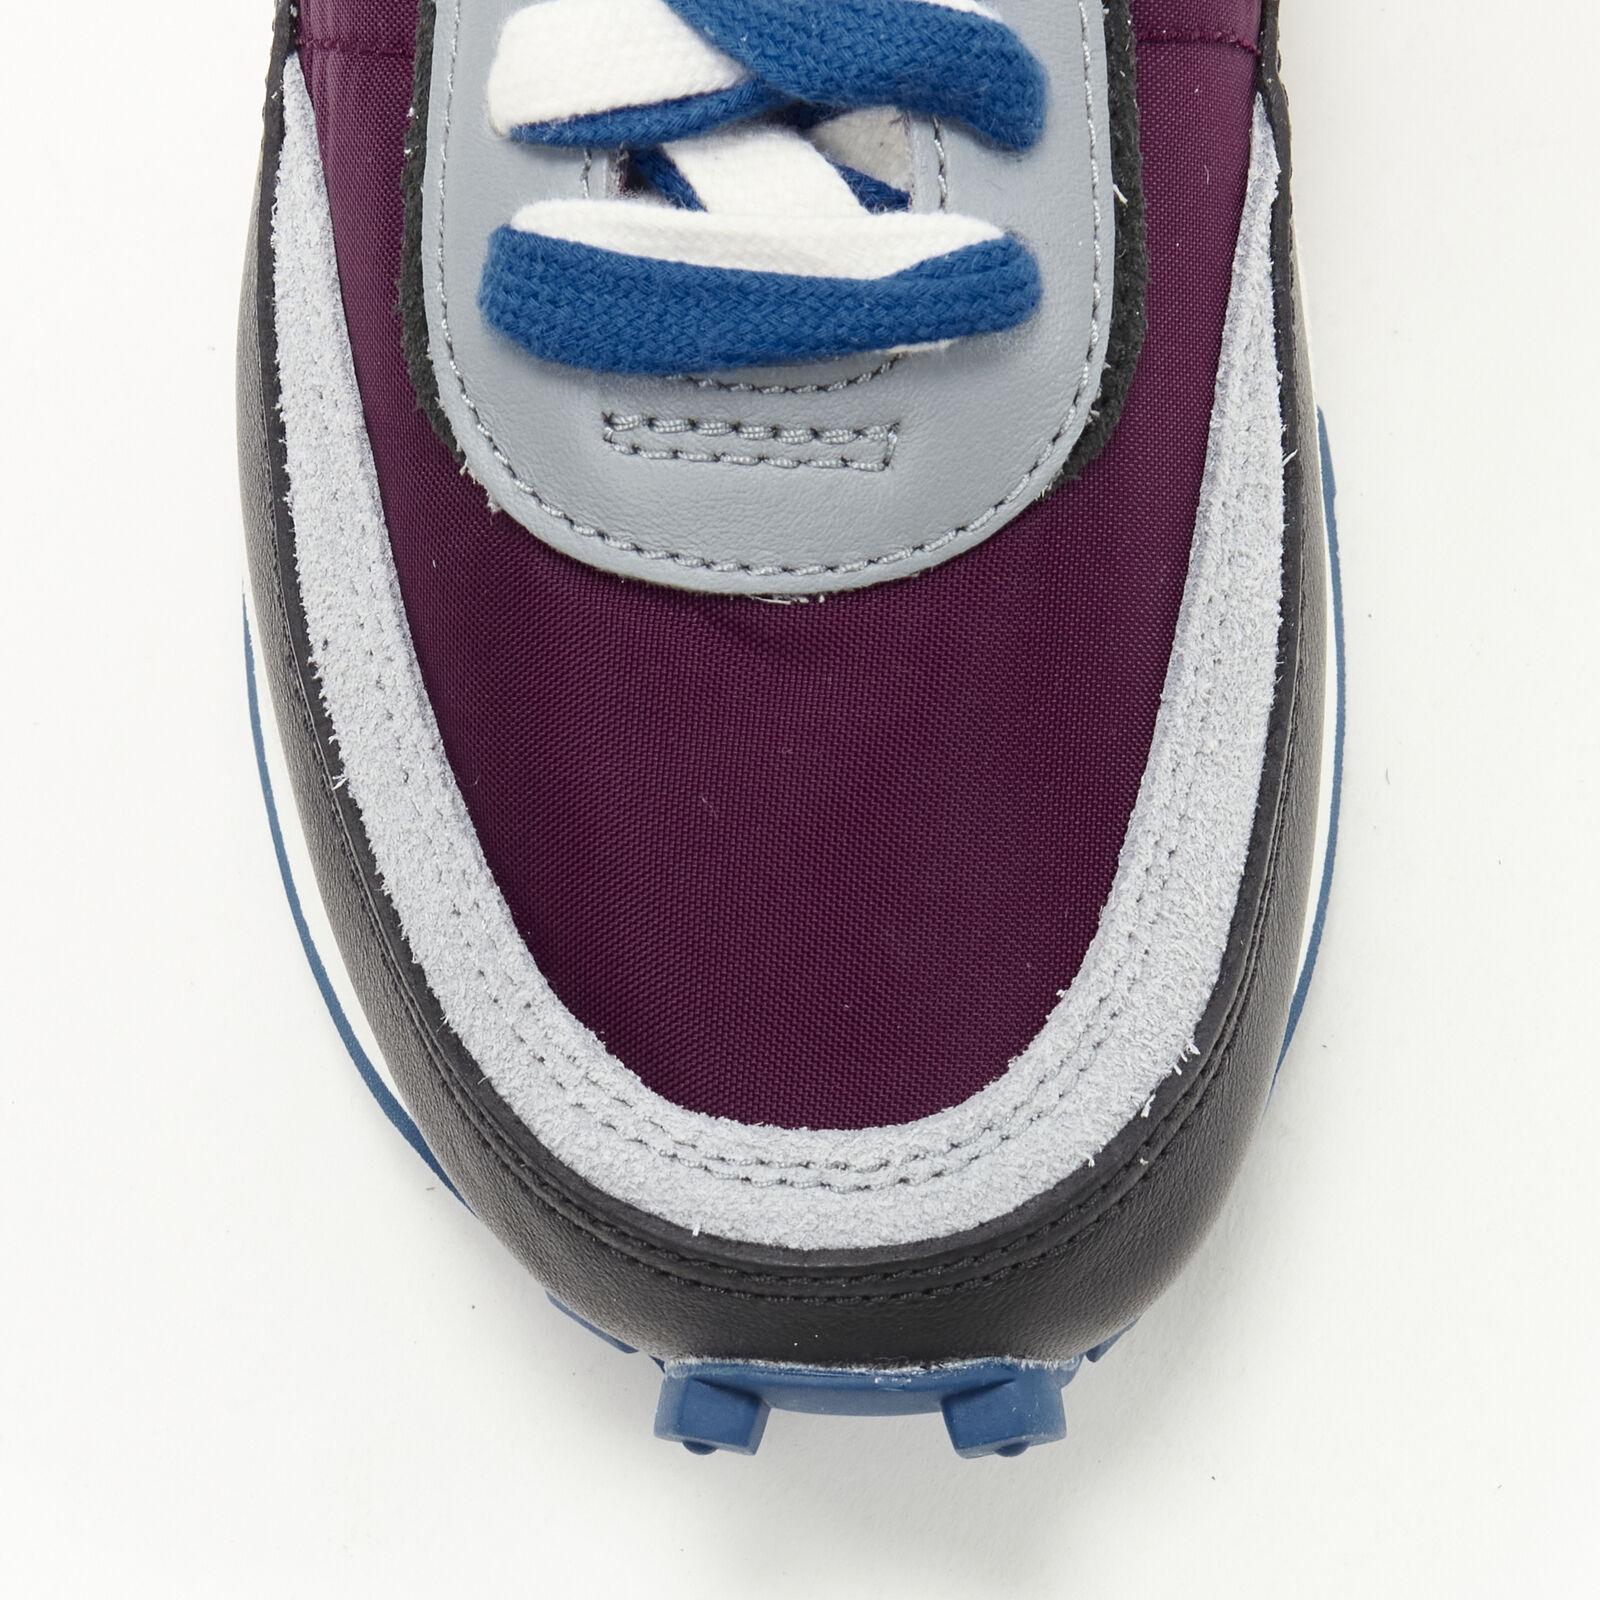 NIKE SACAI UNDERCOVER LD Waffle DJ4877 600 grey purple blue sneaker US5 EU37.5 For Sale 1